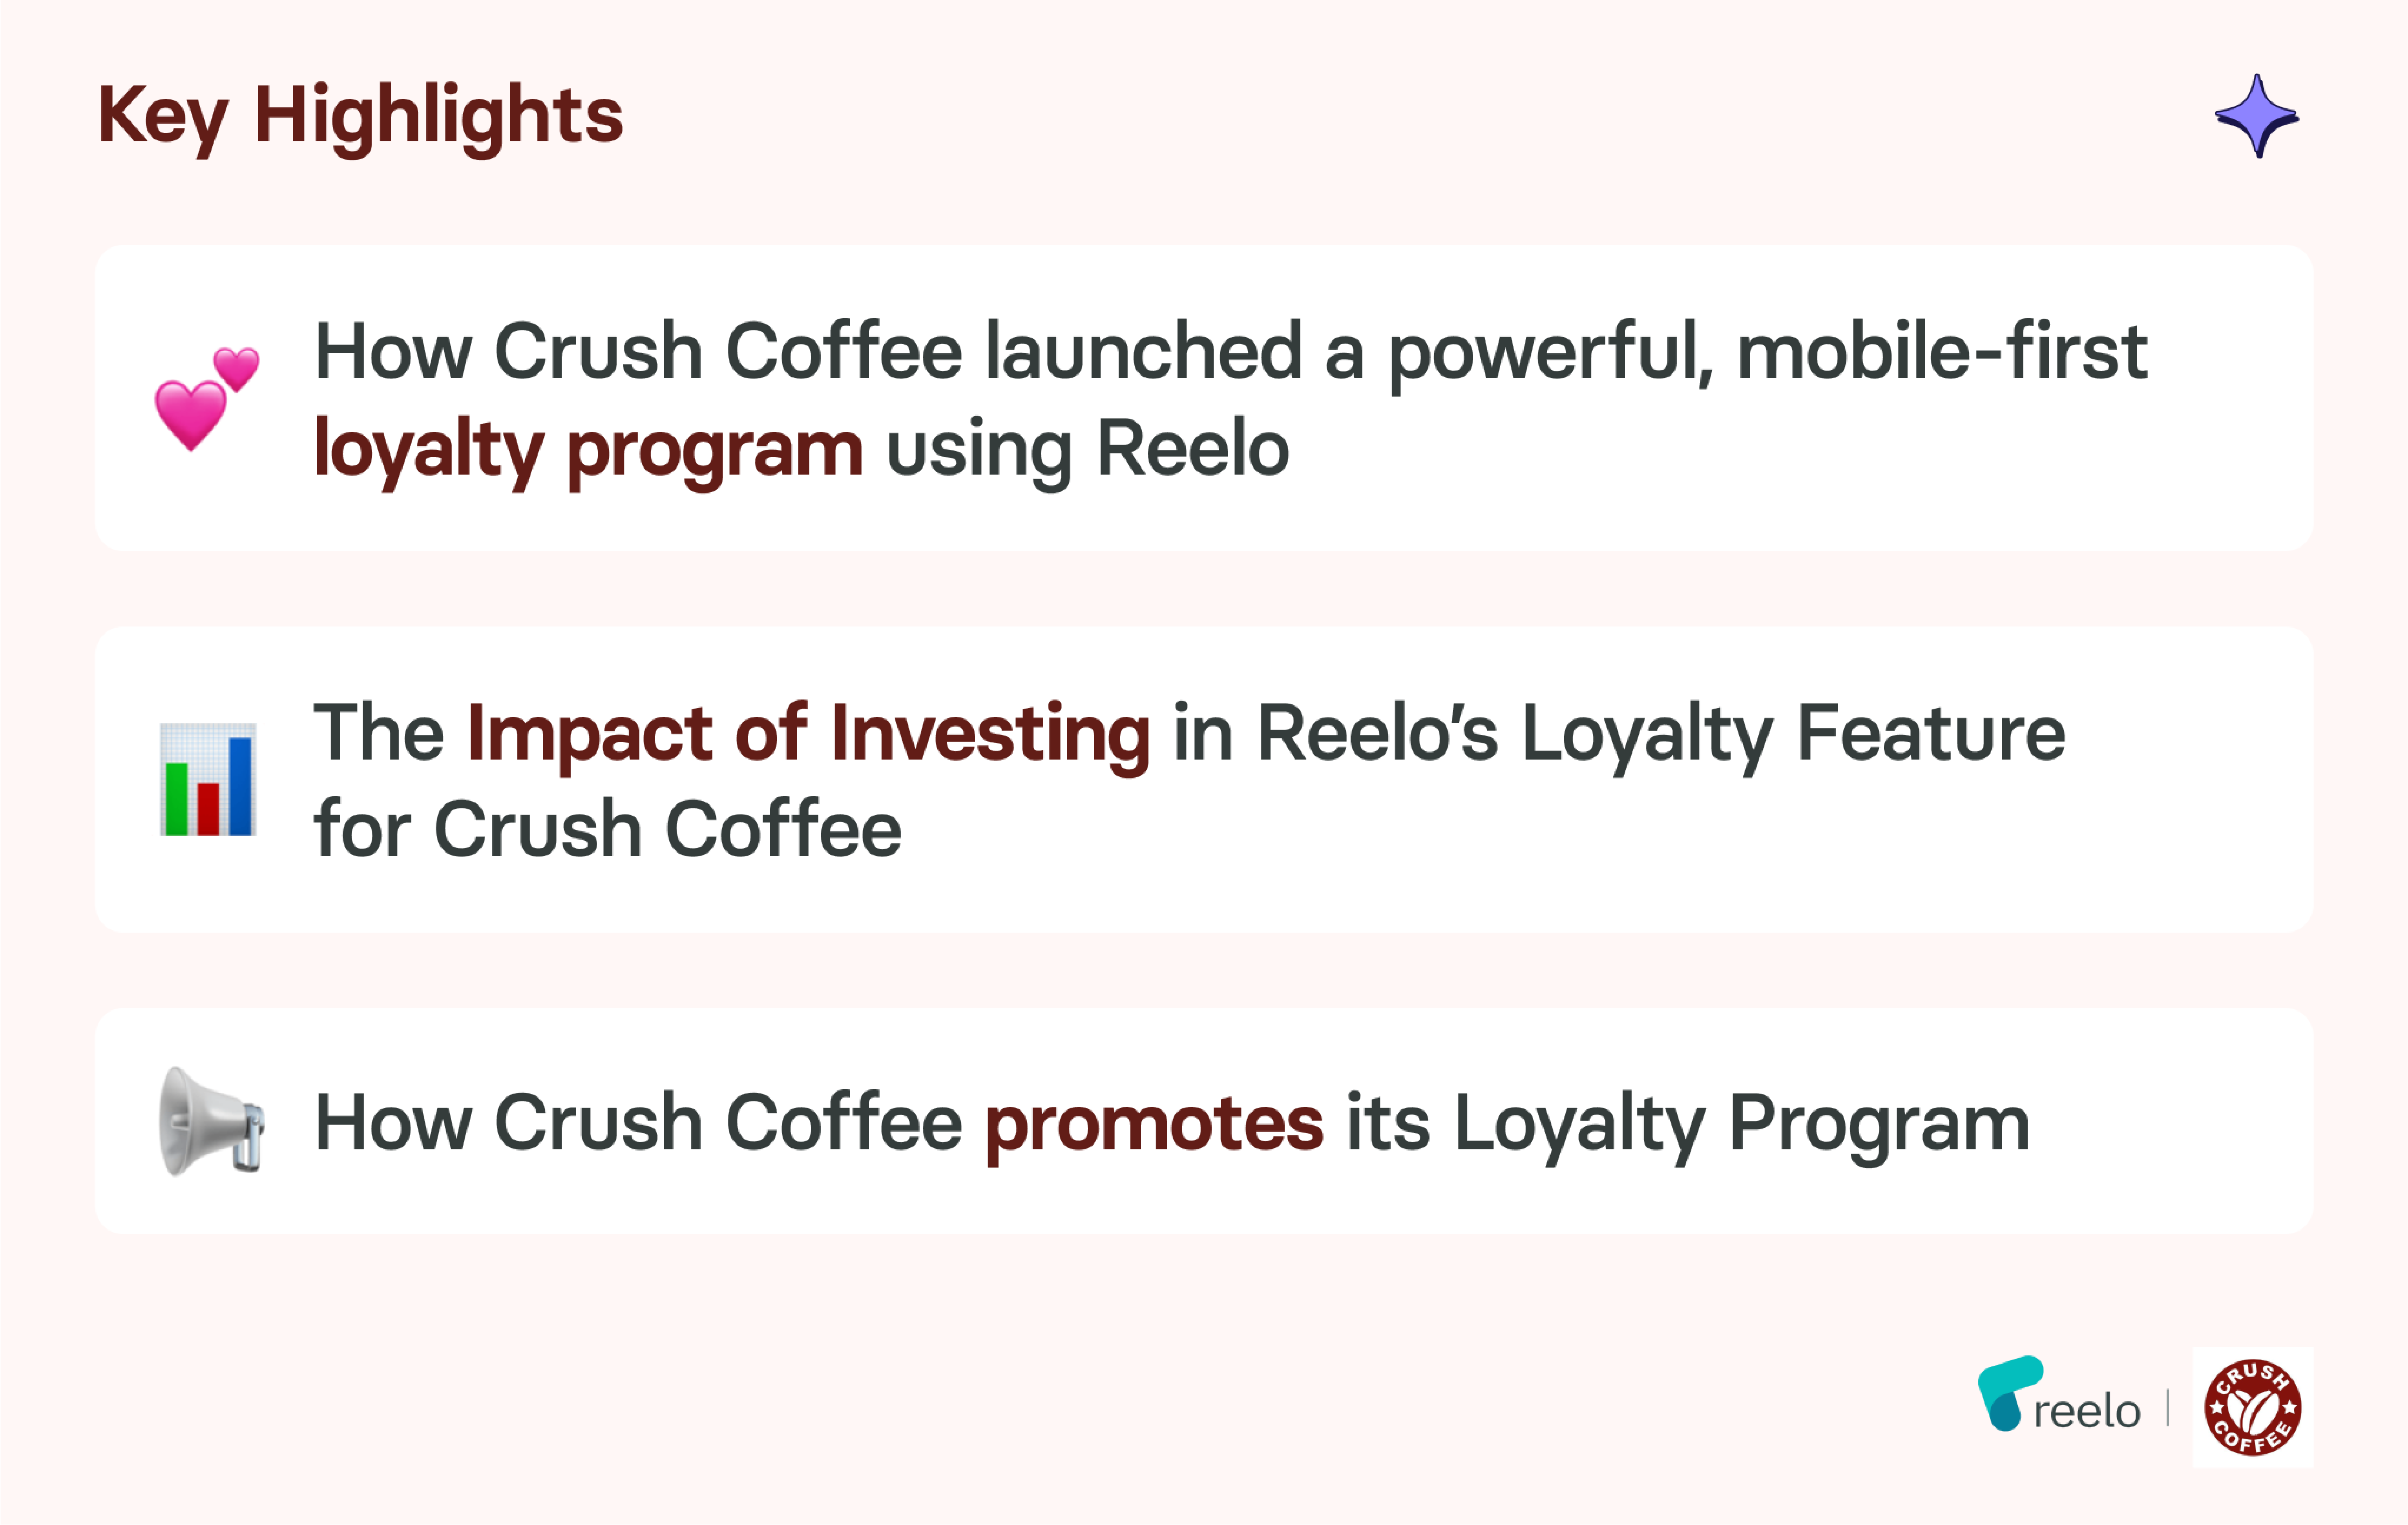 Key highlights of Crush Coffee's loyalty program